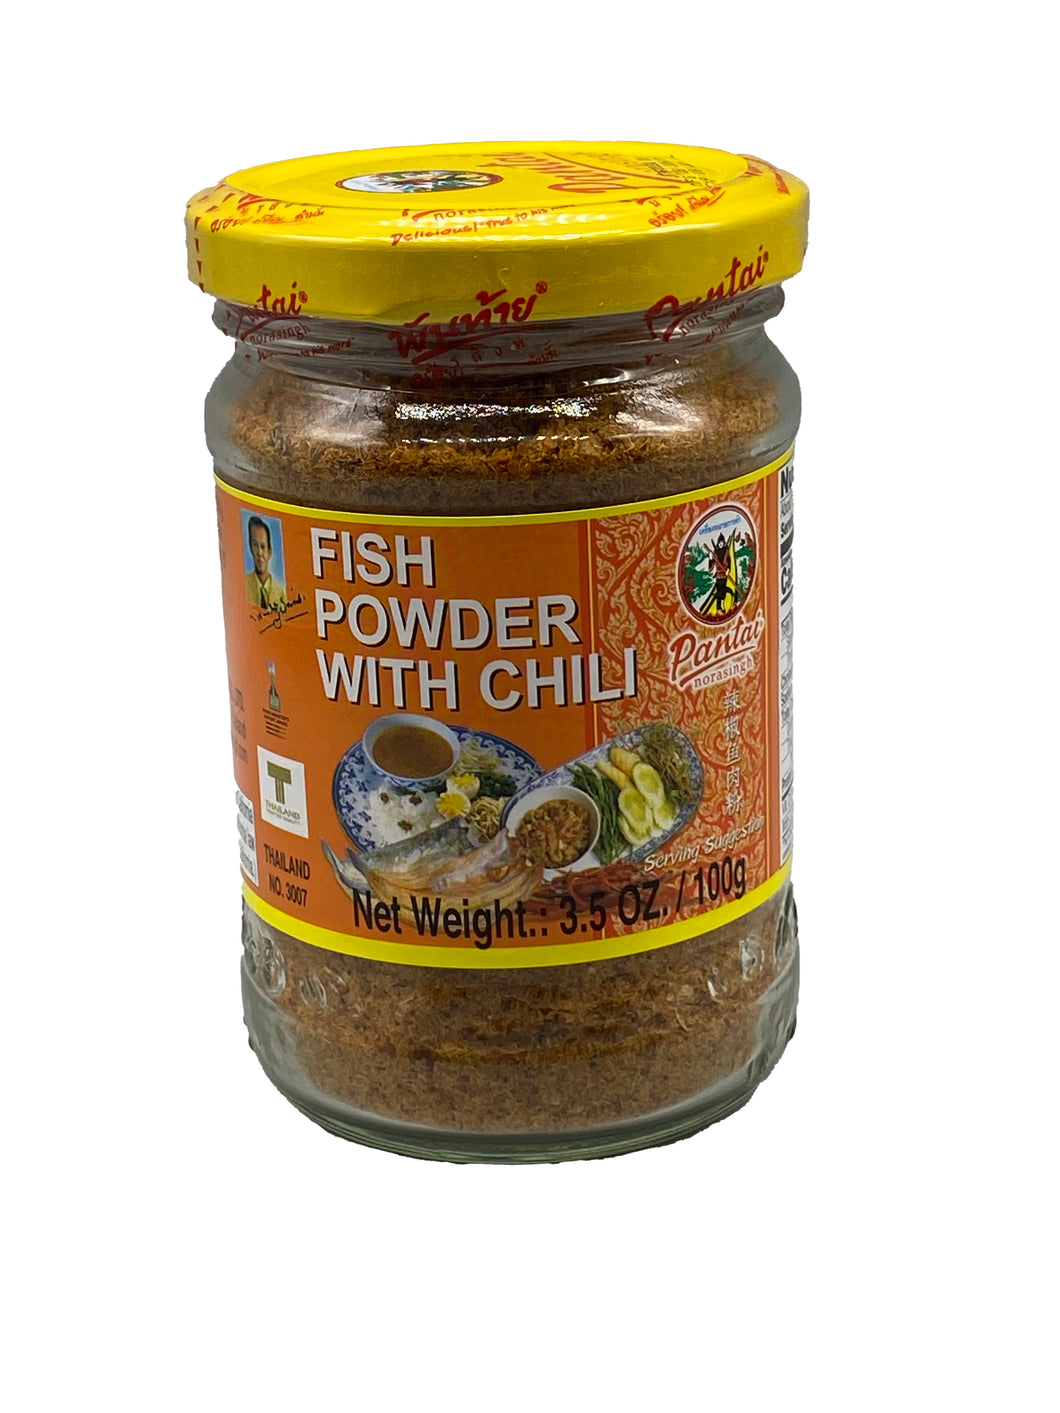 Pantai Fish Powder with Chili